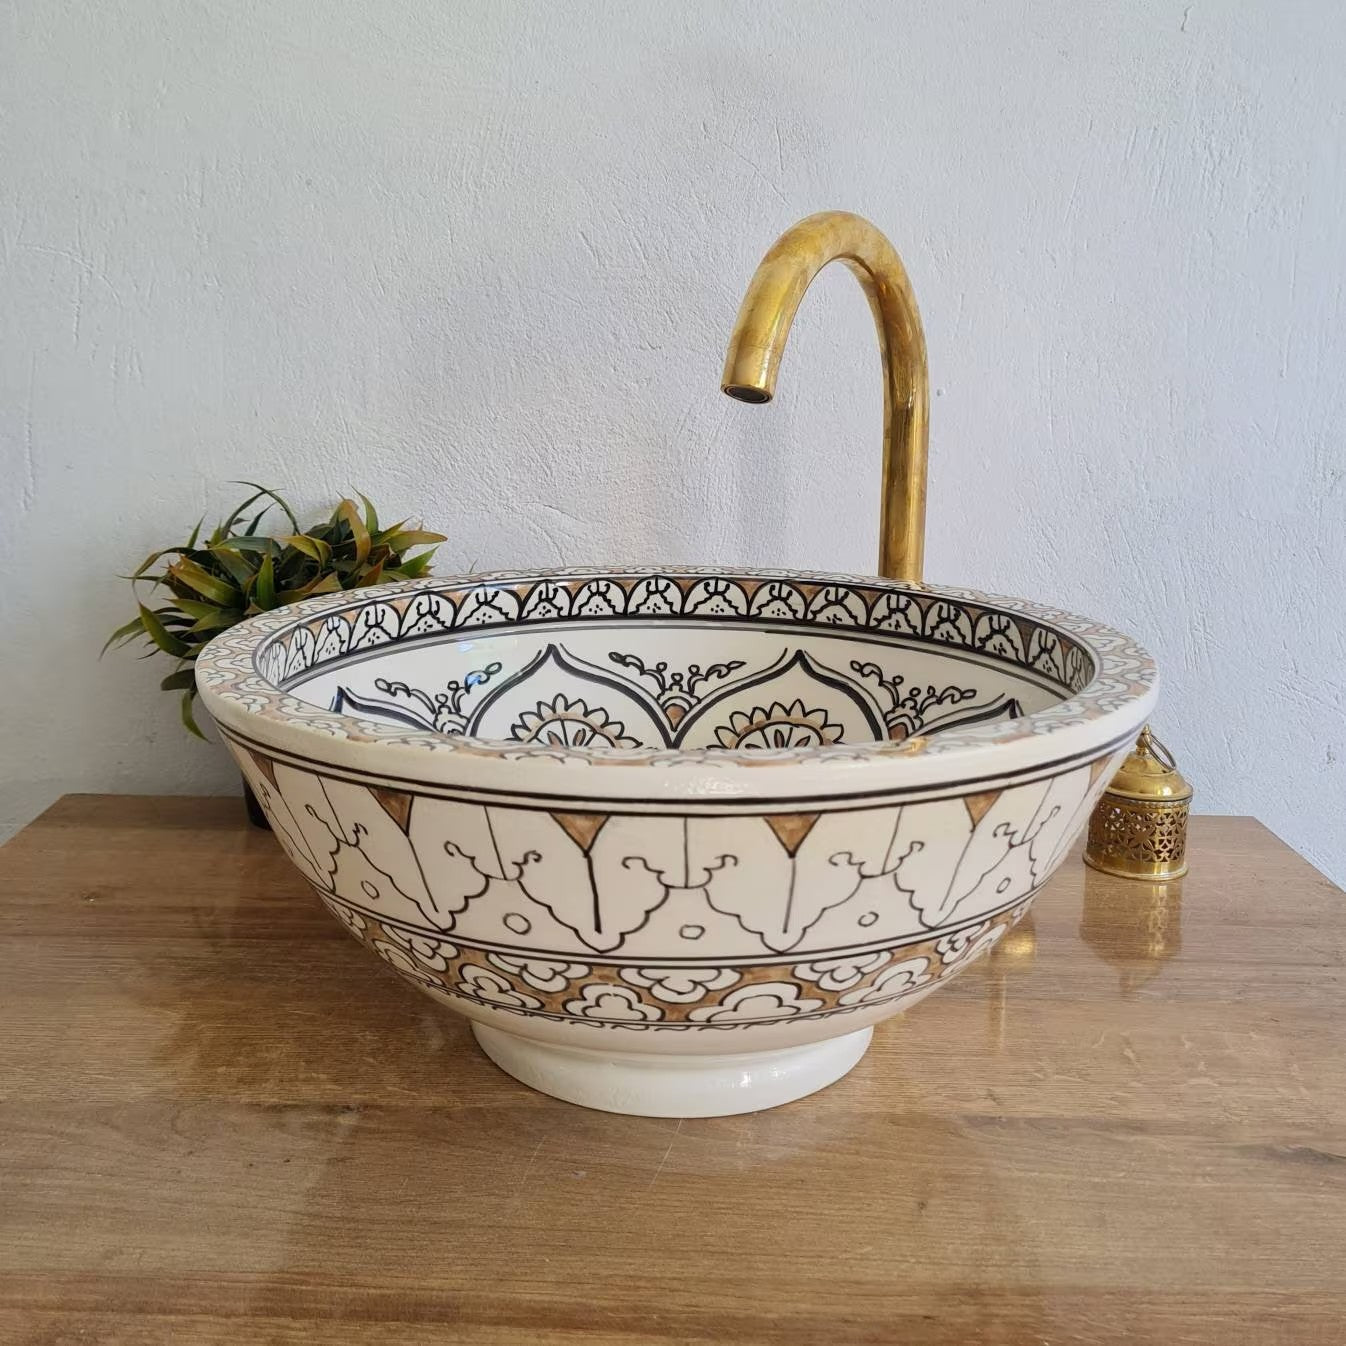 Moroccan sink | moroccan ceramic sink | bathroom sink | moroccan sink bowl #237